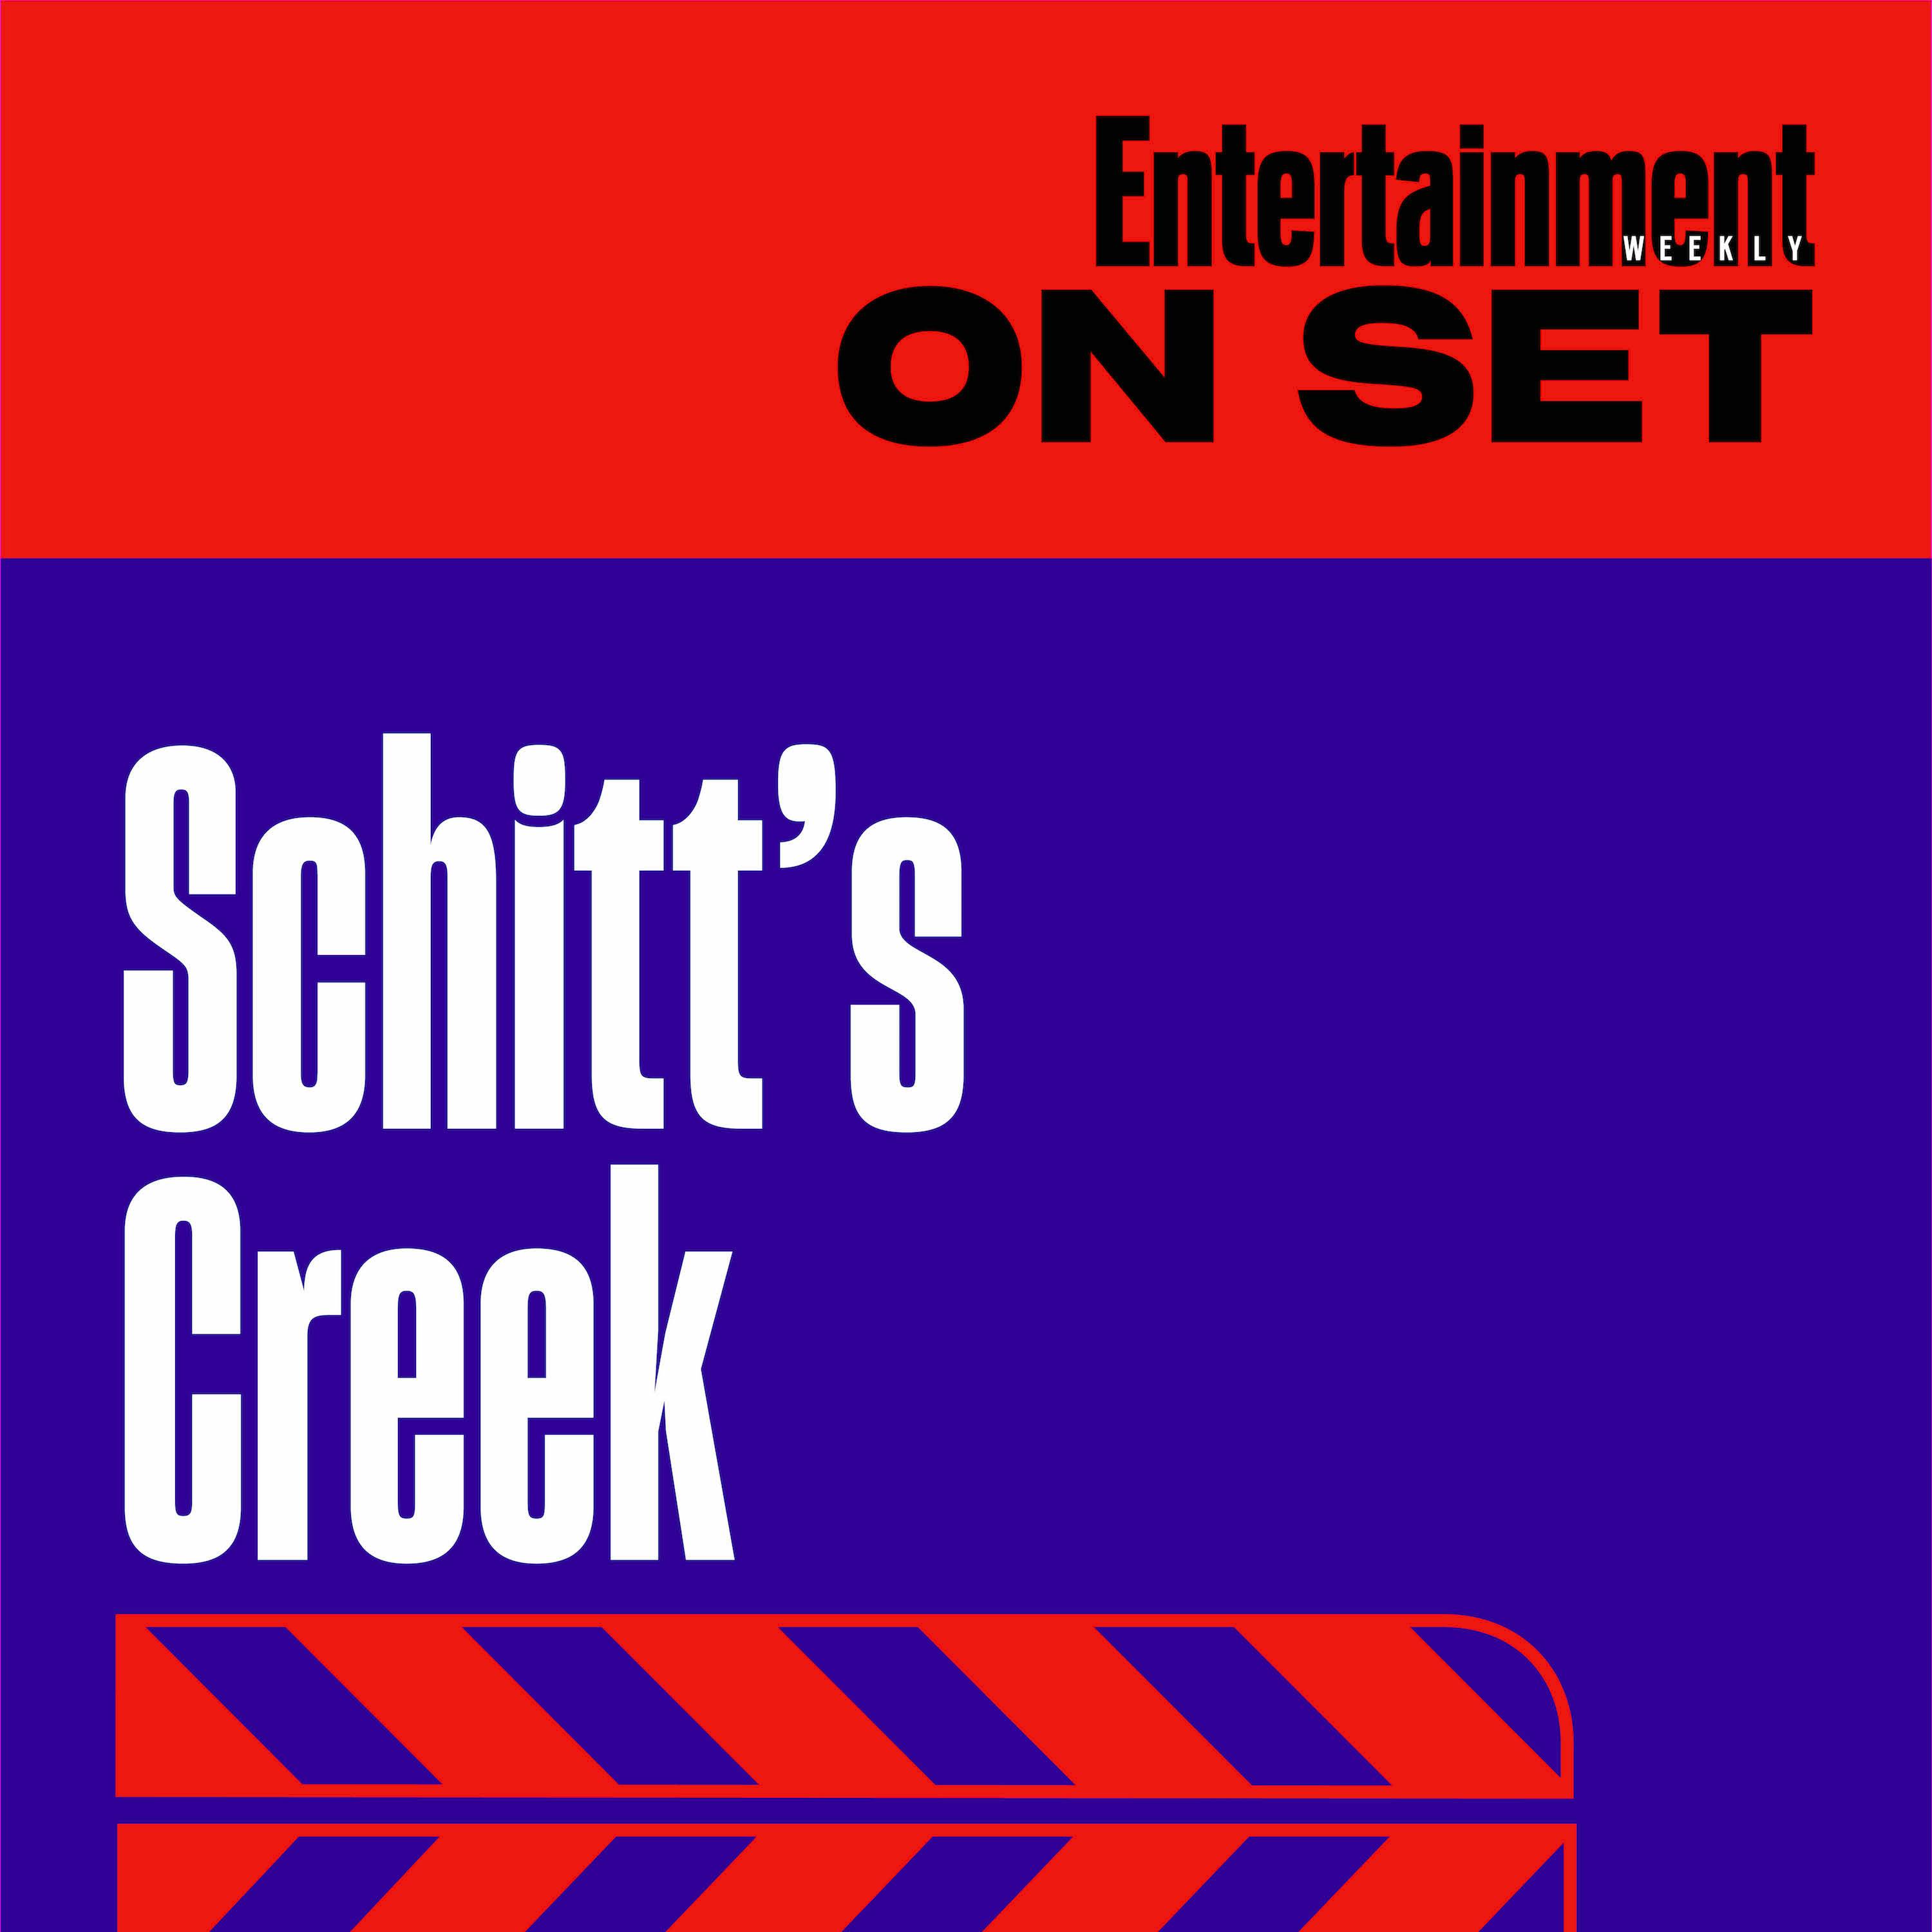 EW On Set: Schitt's Creek Episode 6.12 "The Pitch"